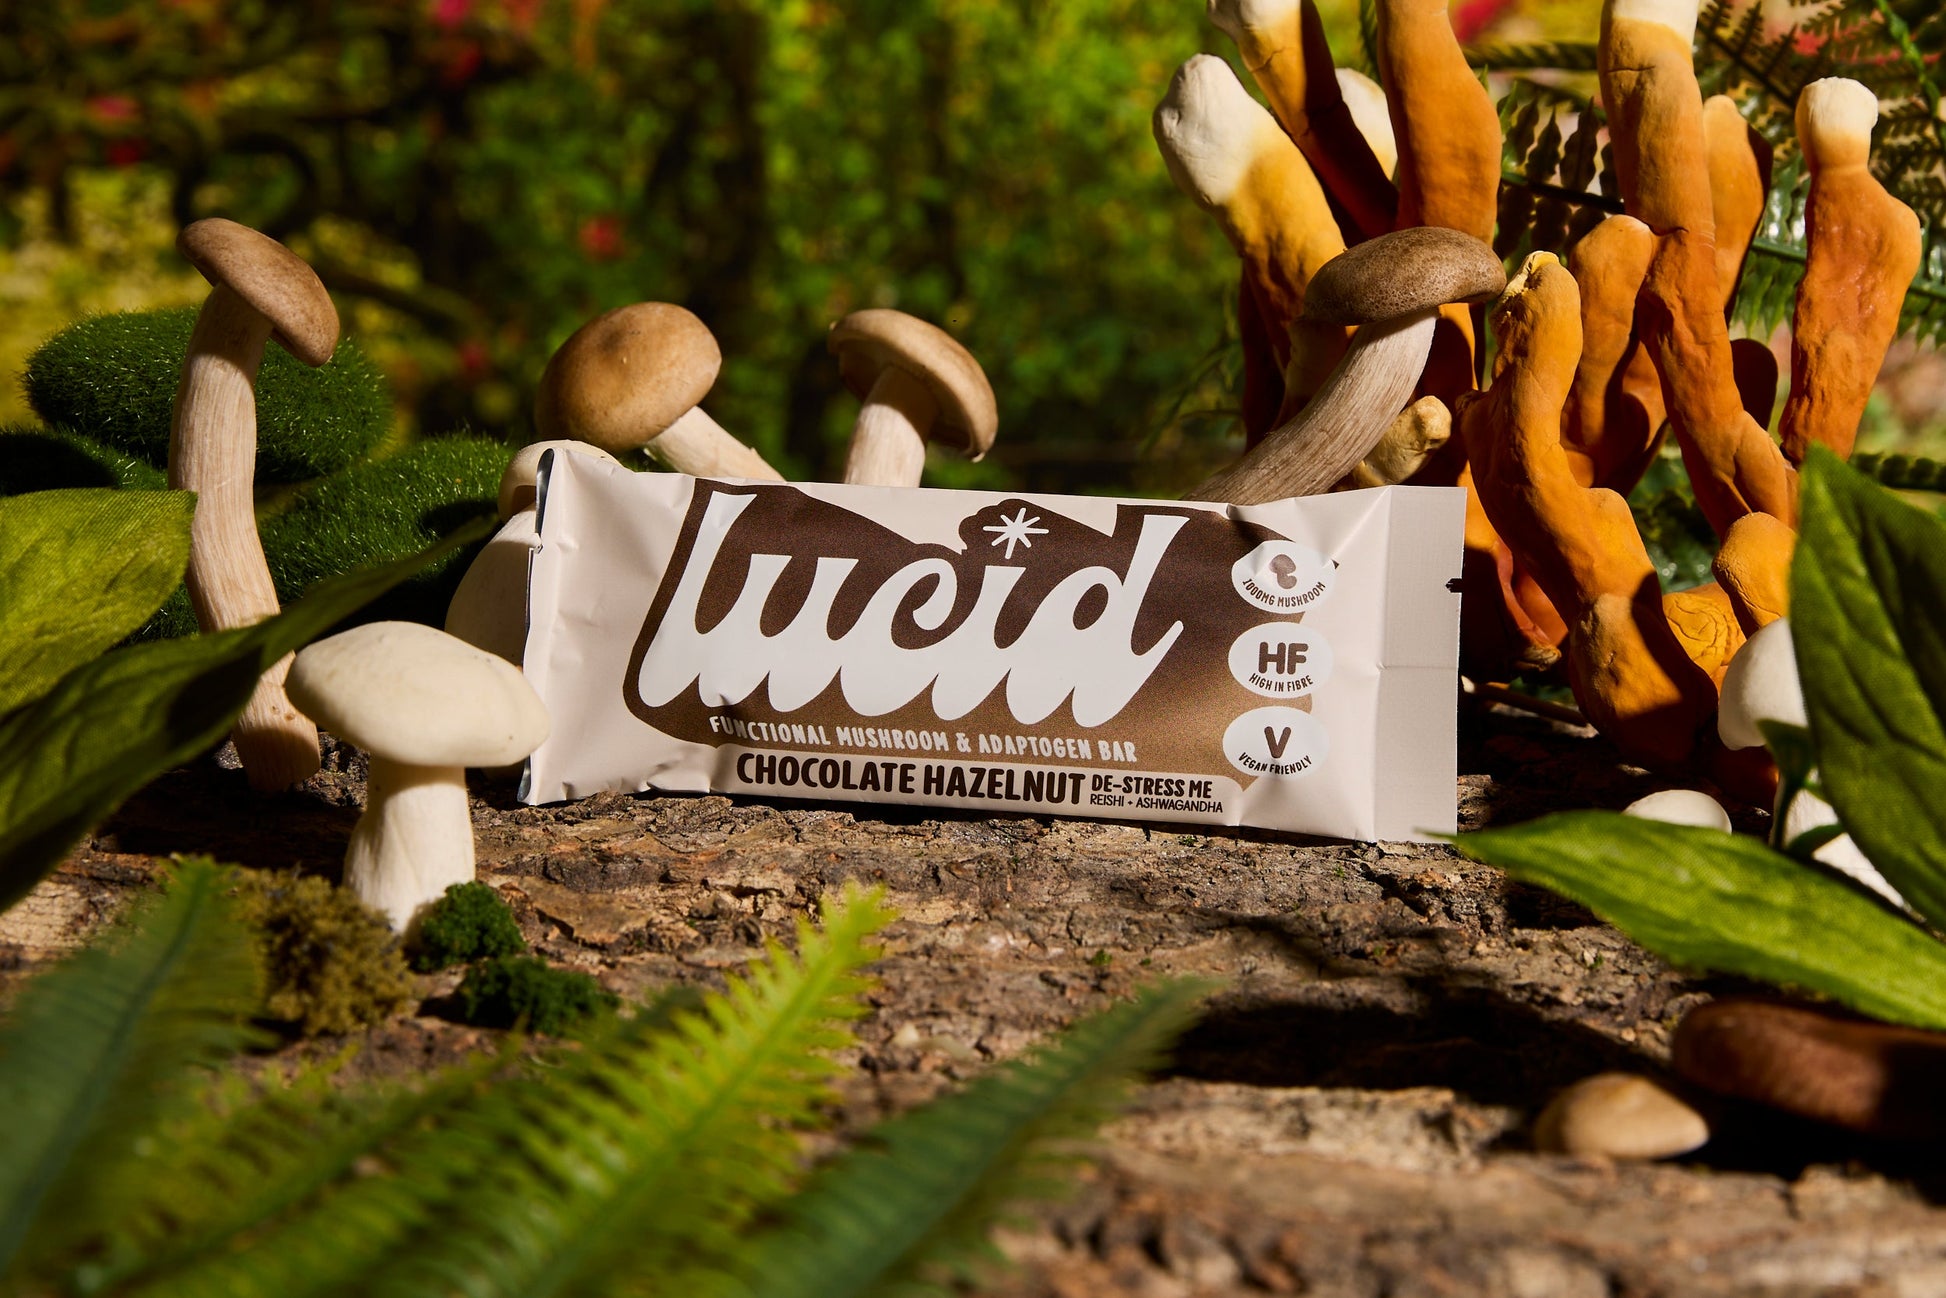 Lucid Chocolate Hazelnut bar with Reishi and Ashwagandha, amid natural greenery and mushrooms, highlights wellness.